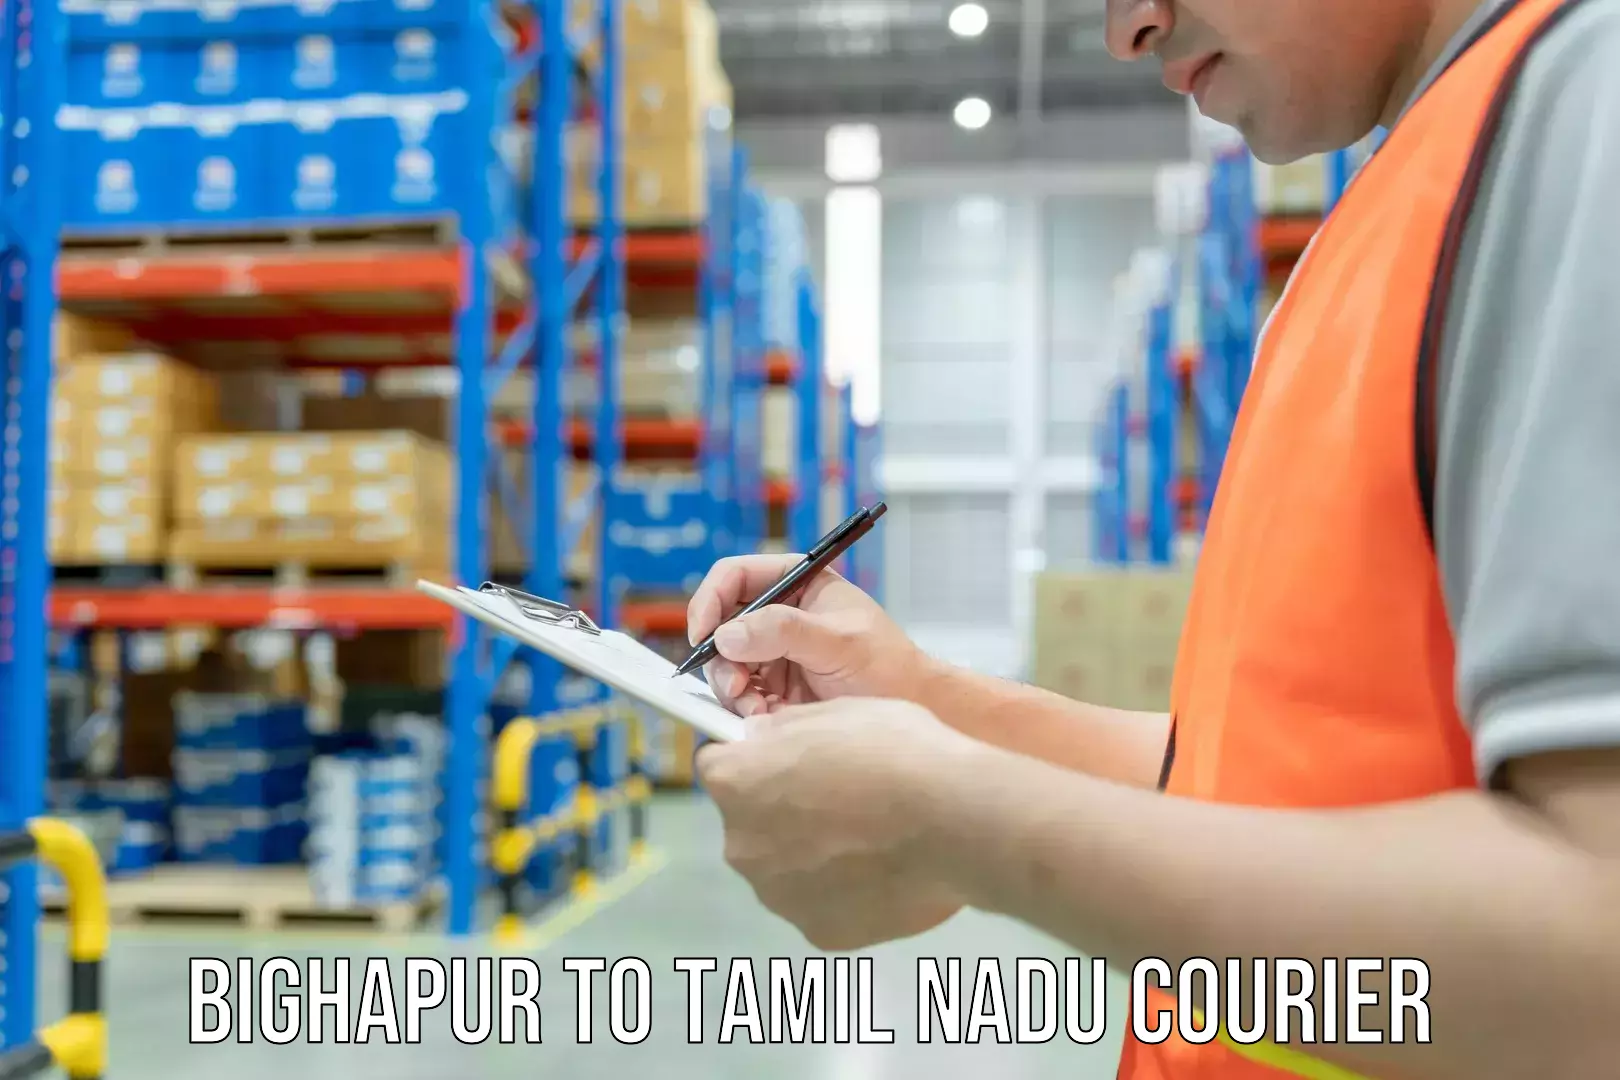 Advanced delivery network Bighapur to Tamil Nadu